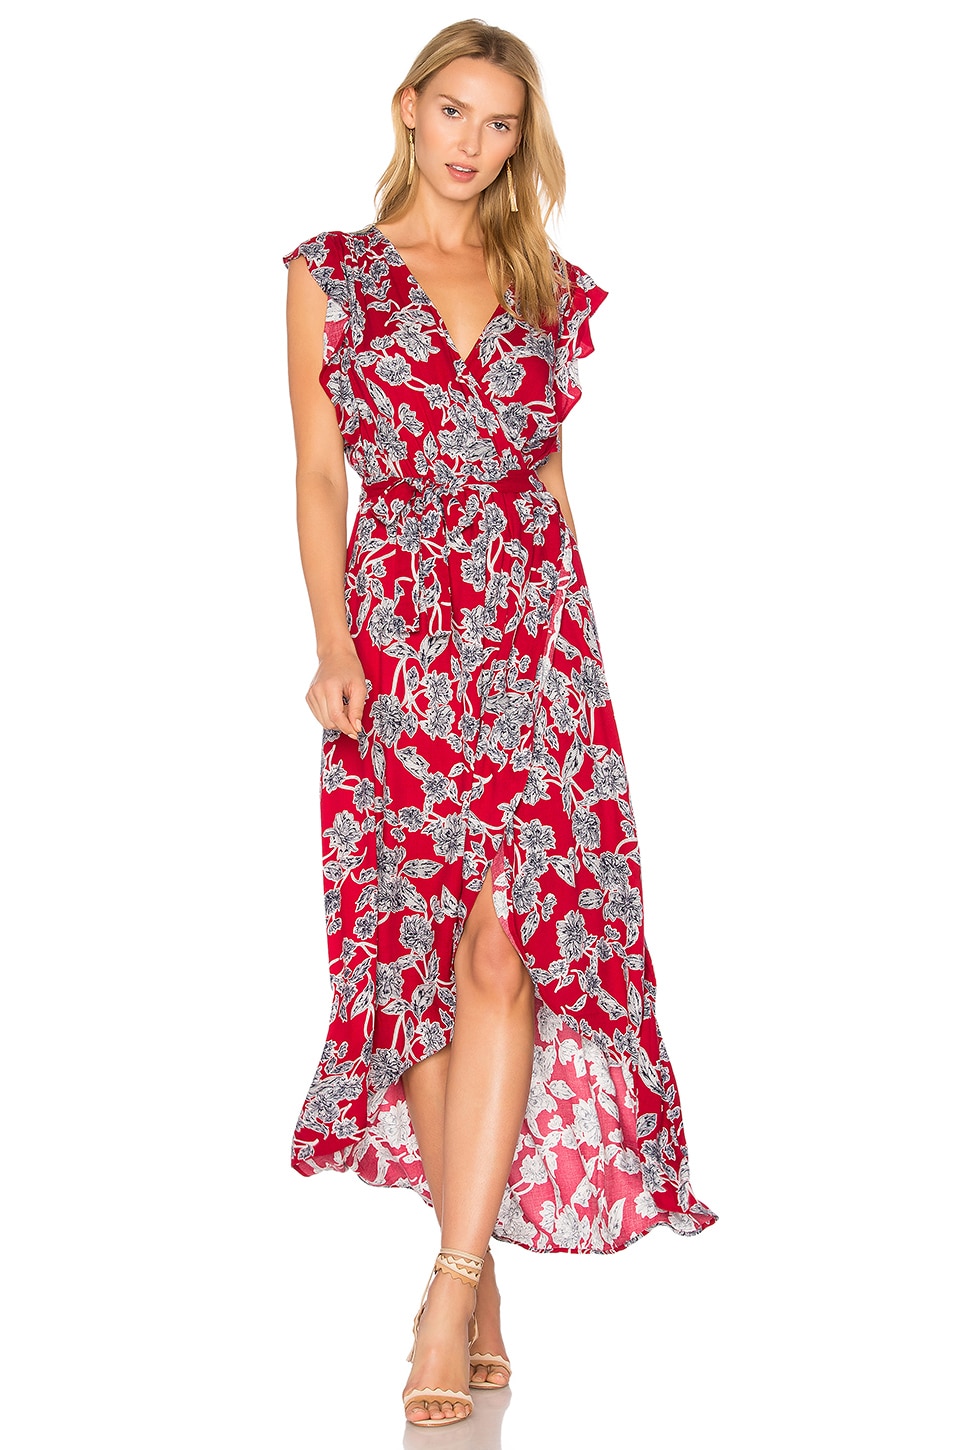 Splendid Etched Floral Wrap Dress in Beet Red | REVOLVE